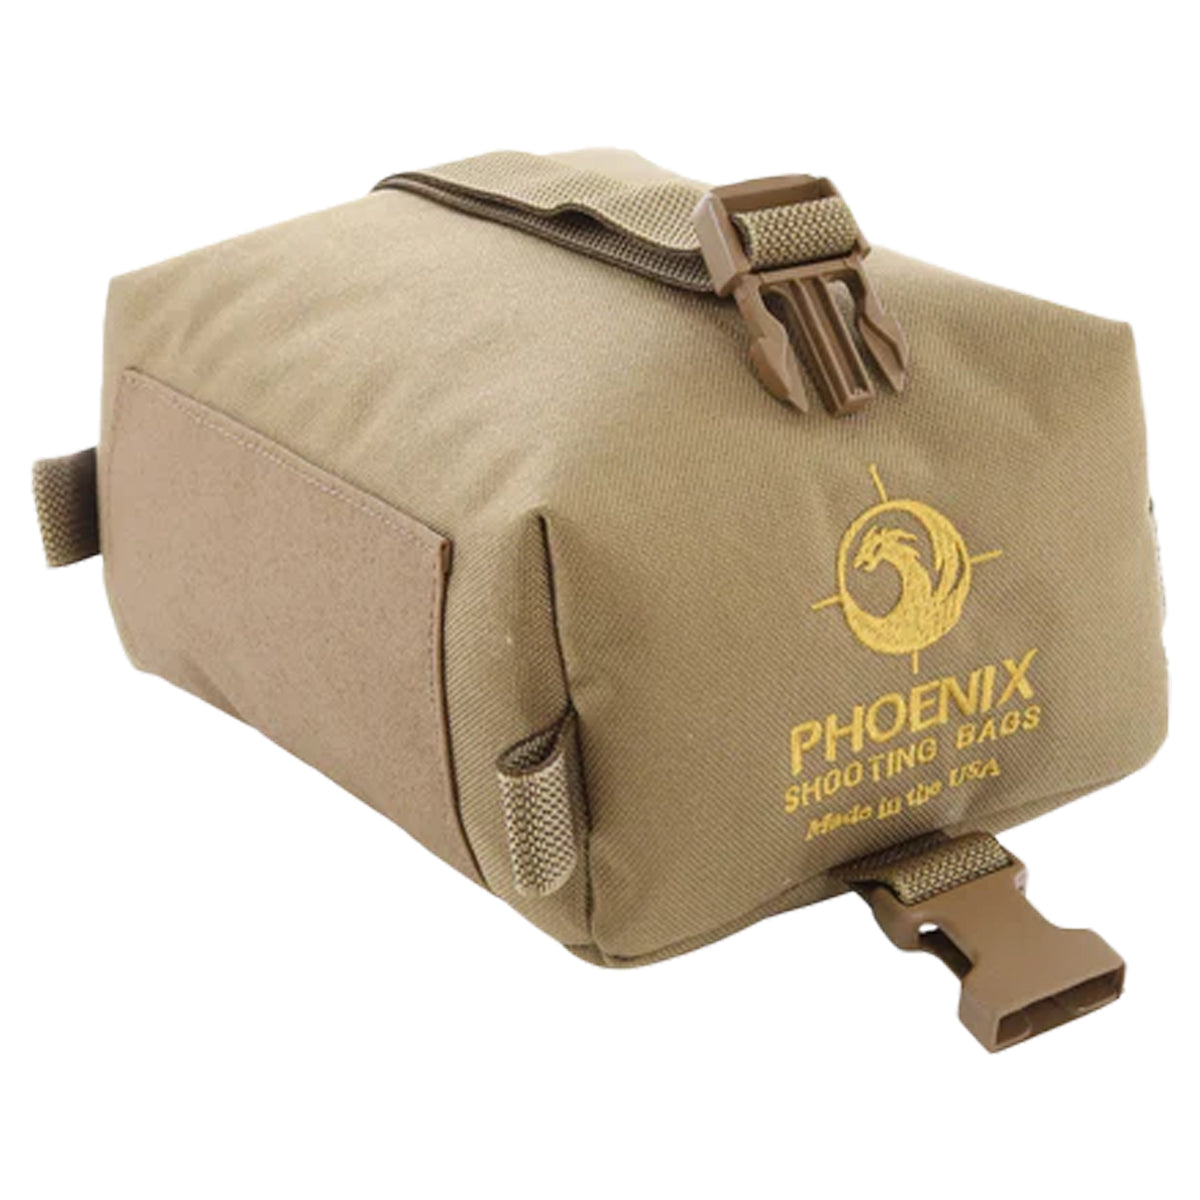 Phoenix Shooting Bags Small Ridge Runner in Coyote by GOHUNT | Phoenix Shooting Bags - GOHUNT Shop